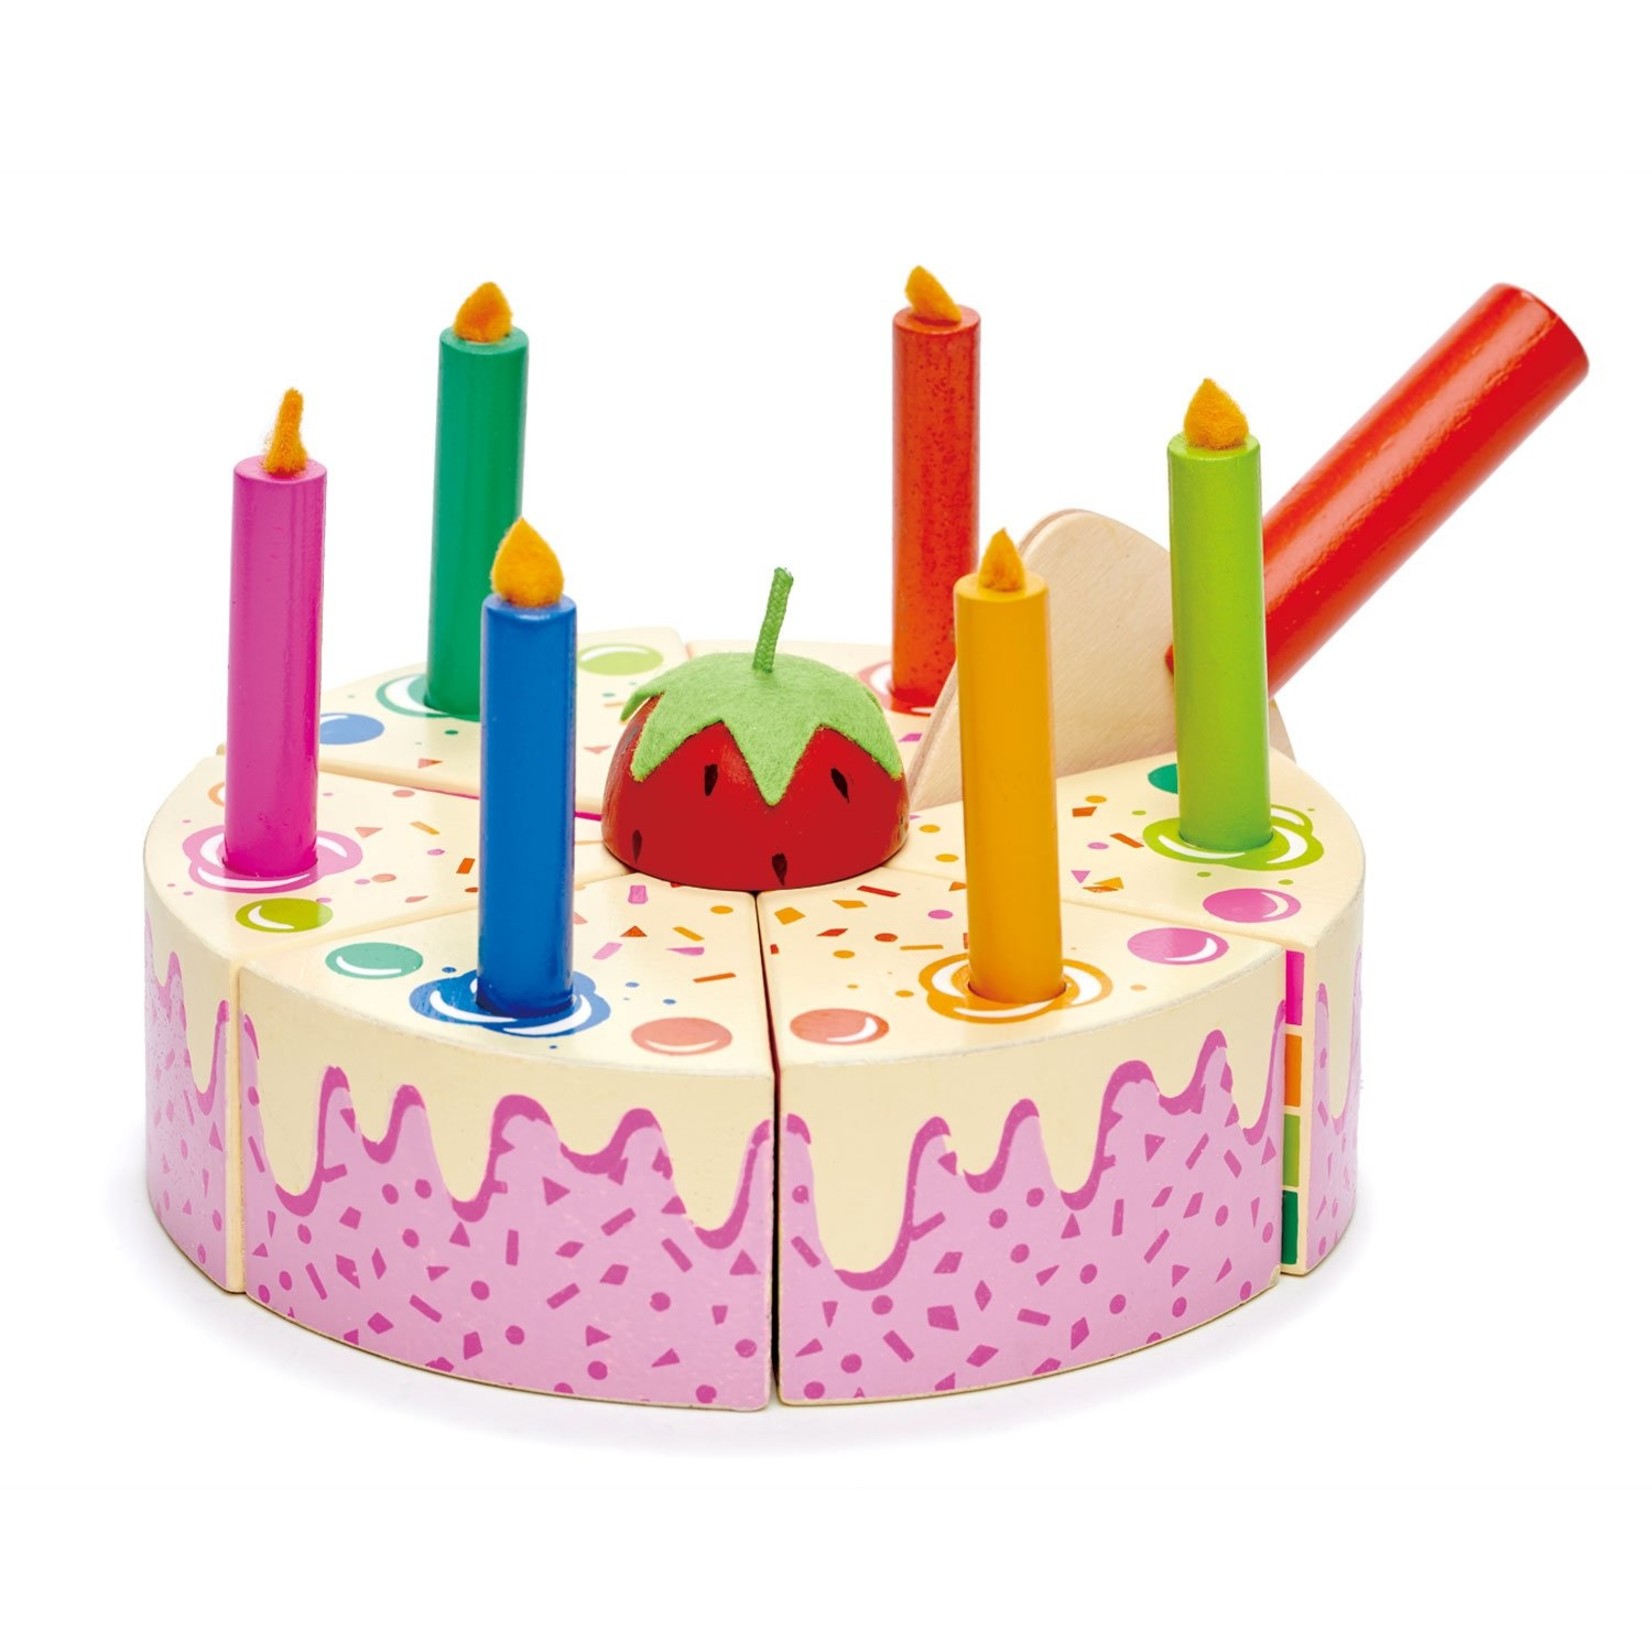 TENDER LEAF TOYS RAINBOW BIRTHDAY CAKE